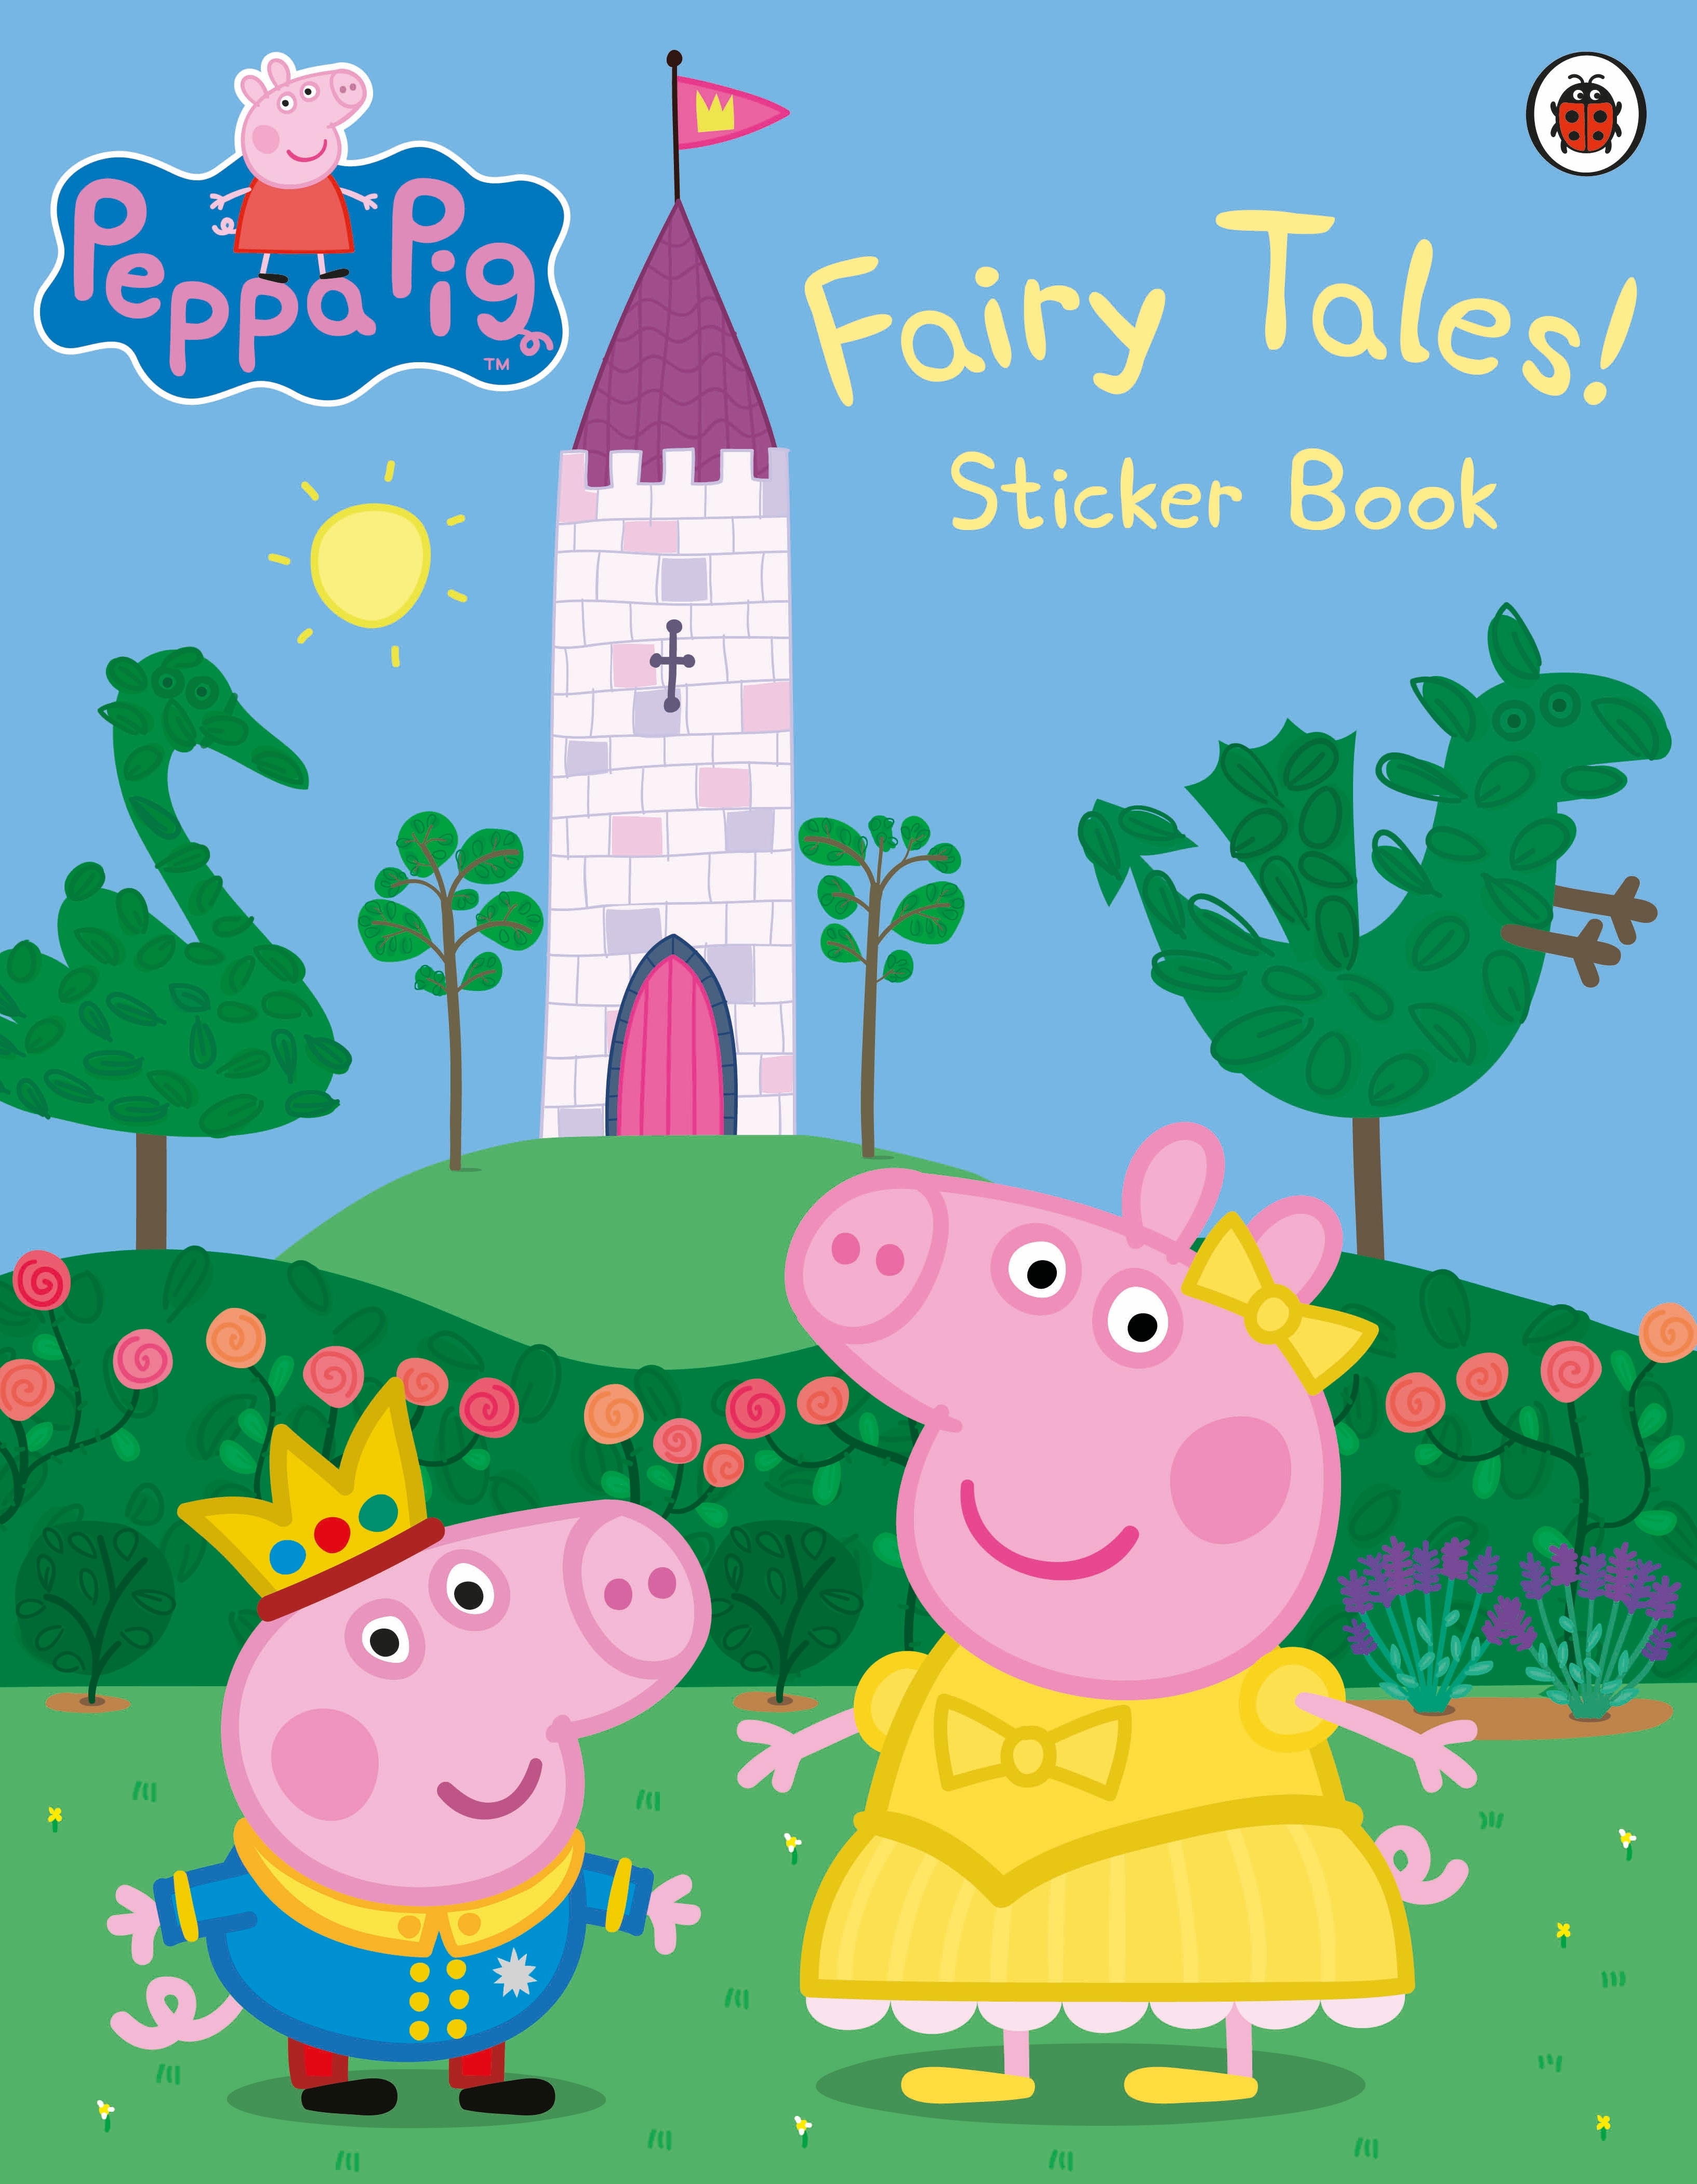 Book “Peppa Pig: Fairy Tales! Sticker Book” by Peppa Pig — December 31, 2015